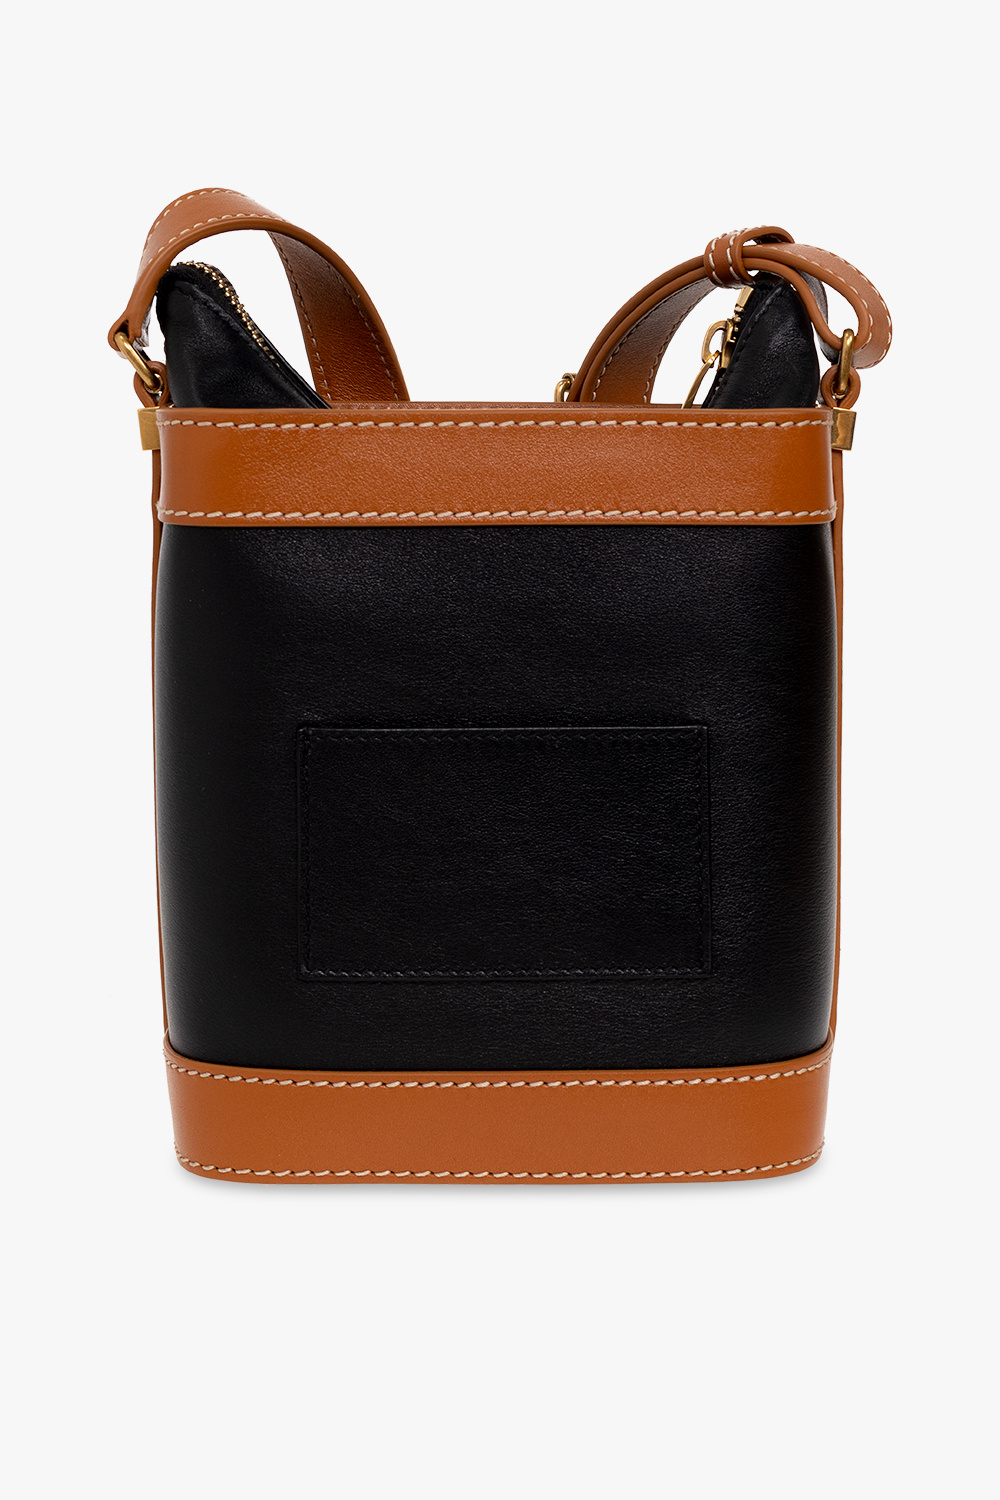 Saint Laurent ‘Aphile‘ bucket bag